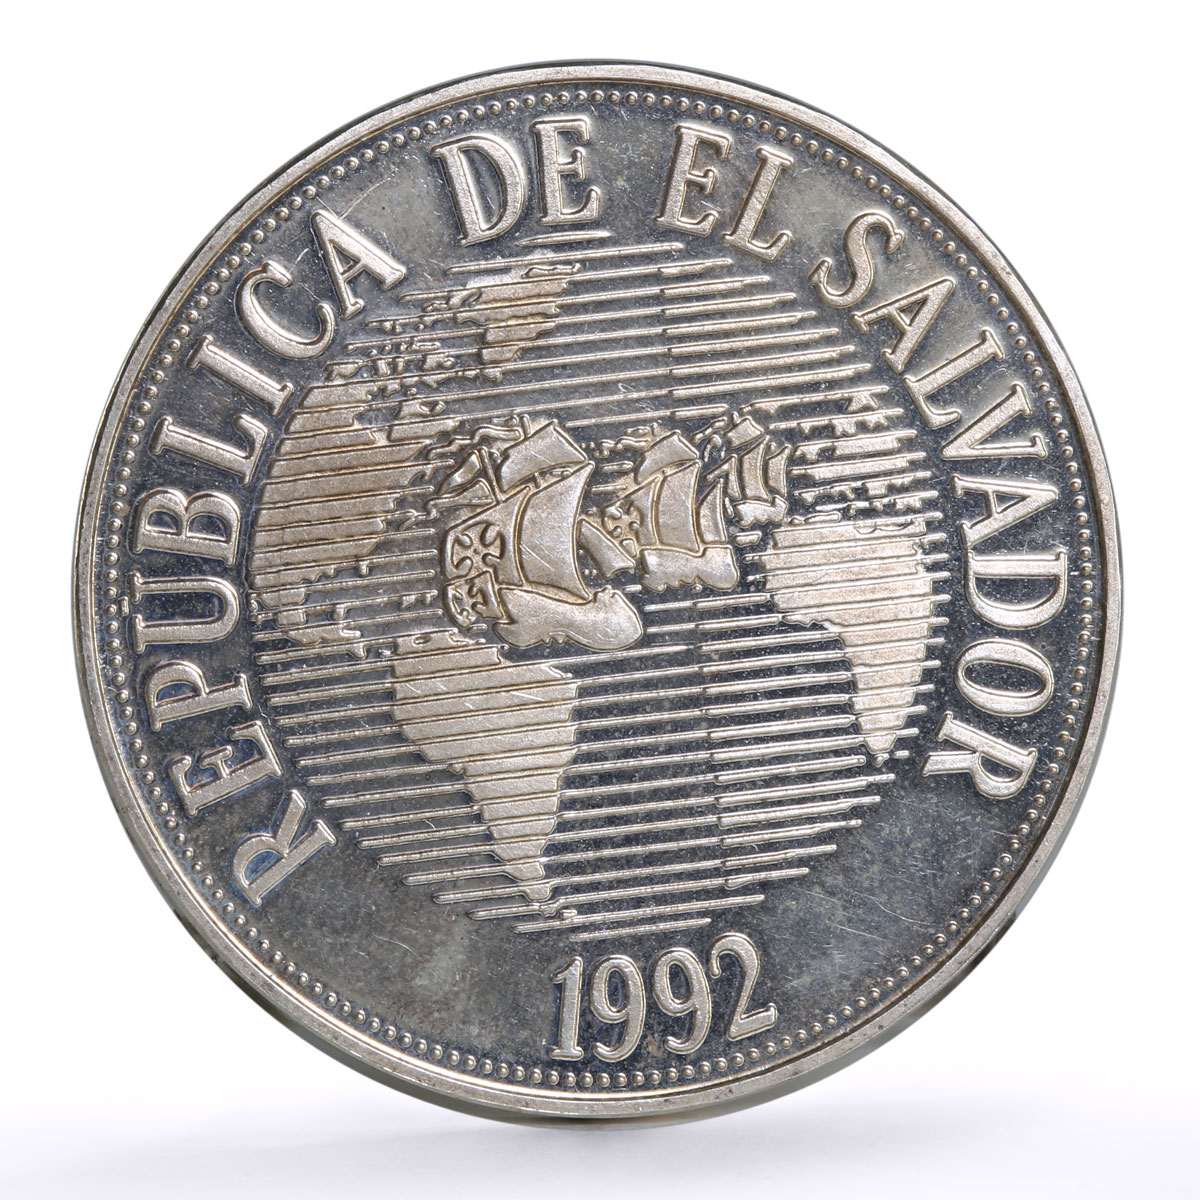 El Salvador 150 colones America Discovery Columbus Ships KM-160 silver coin 1992